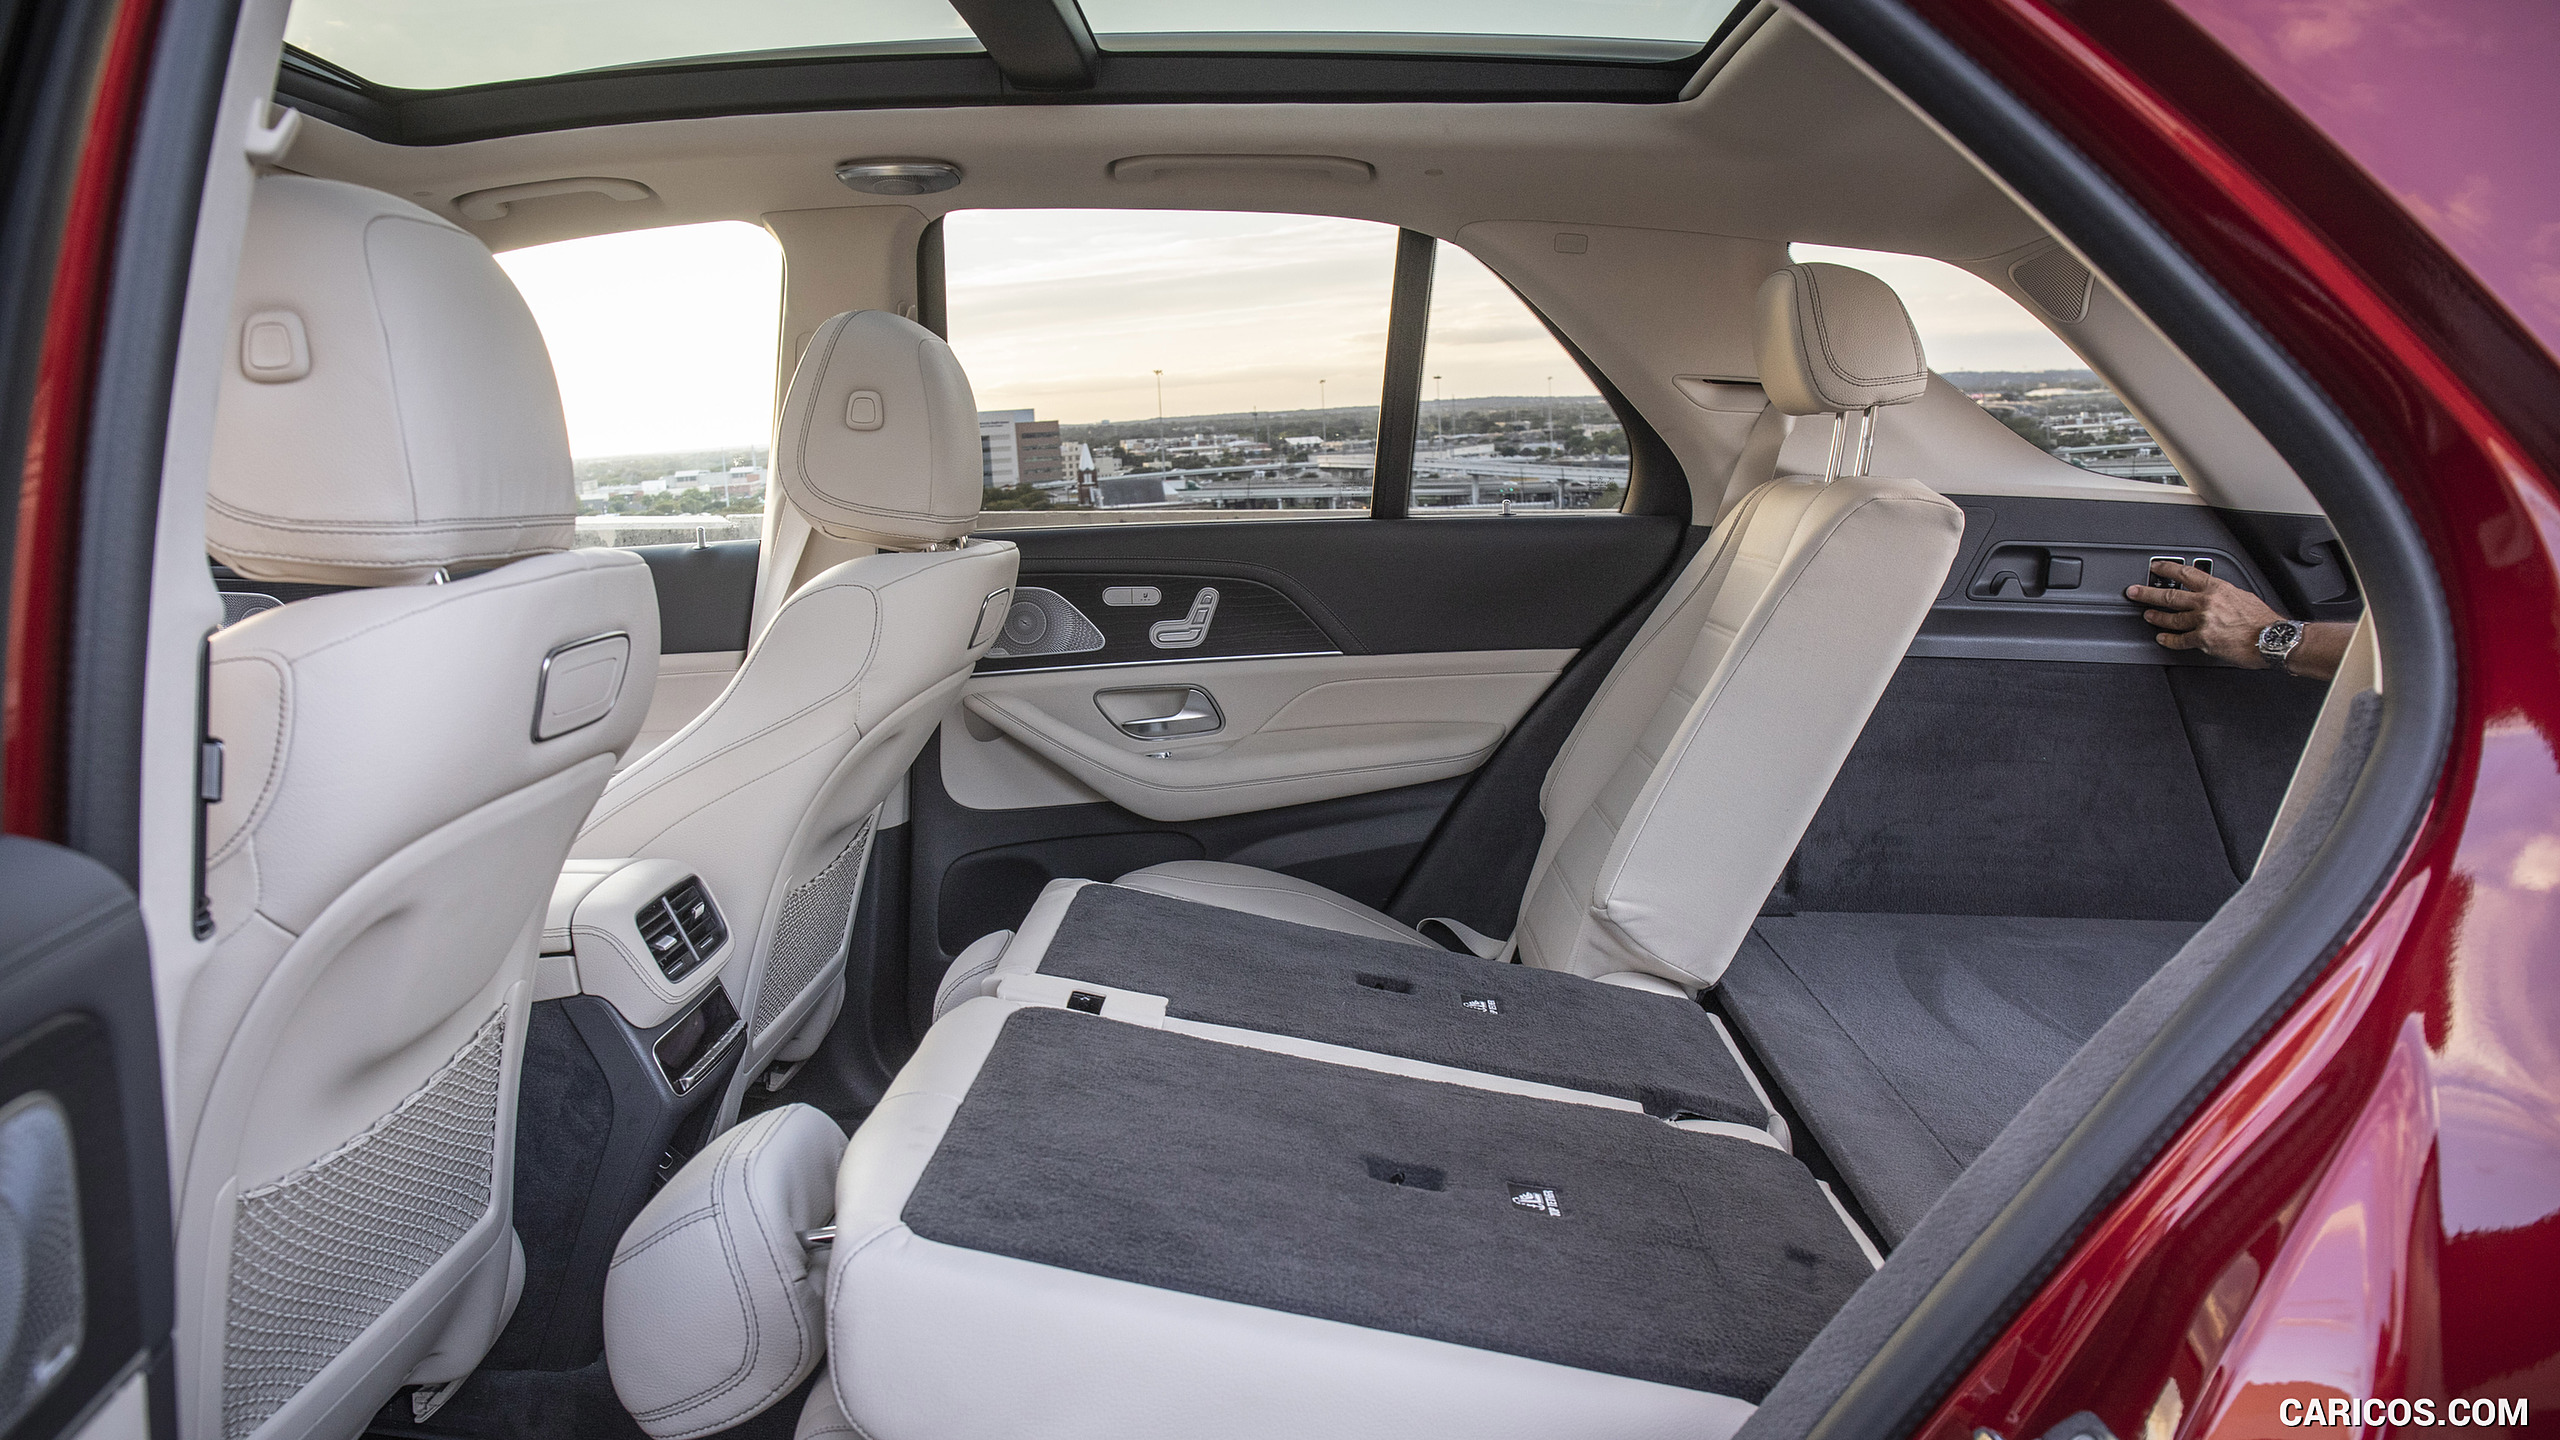 2020 Mercedes-Benz GLE 450 4MATIC (Color: Designo Hyazinth Red Metallic; US-Spec) - Interior, Rear Seats, #339 of 358